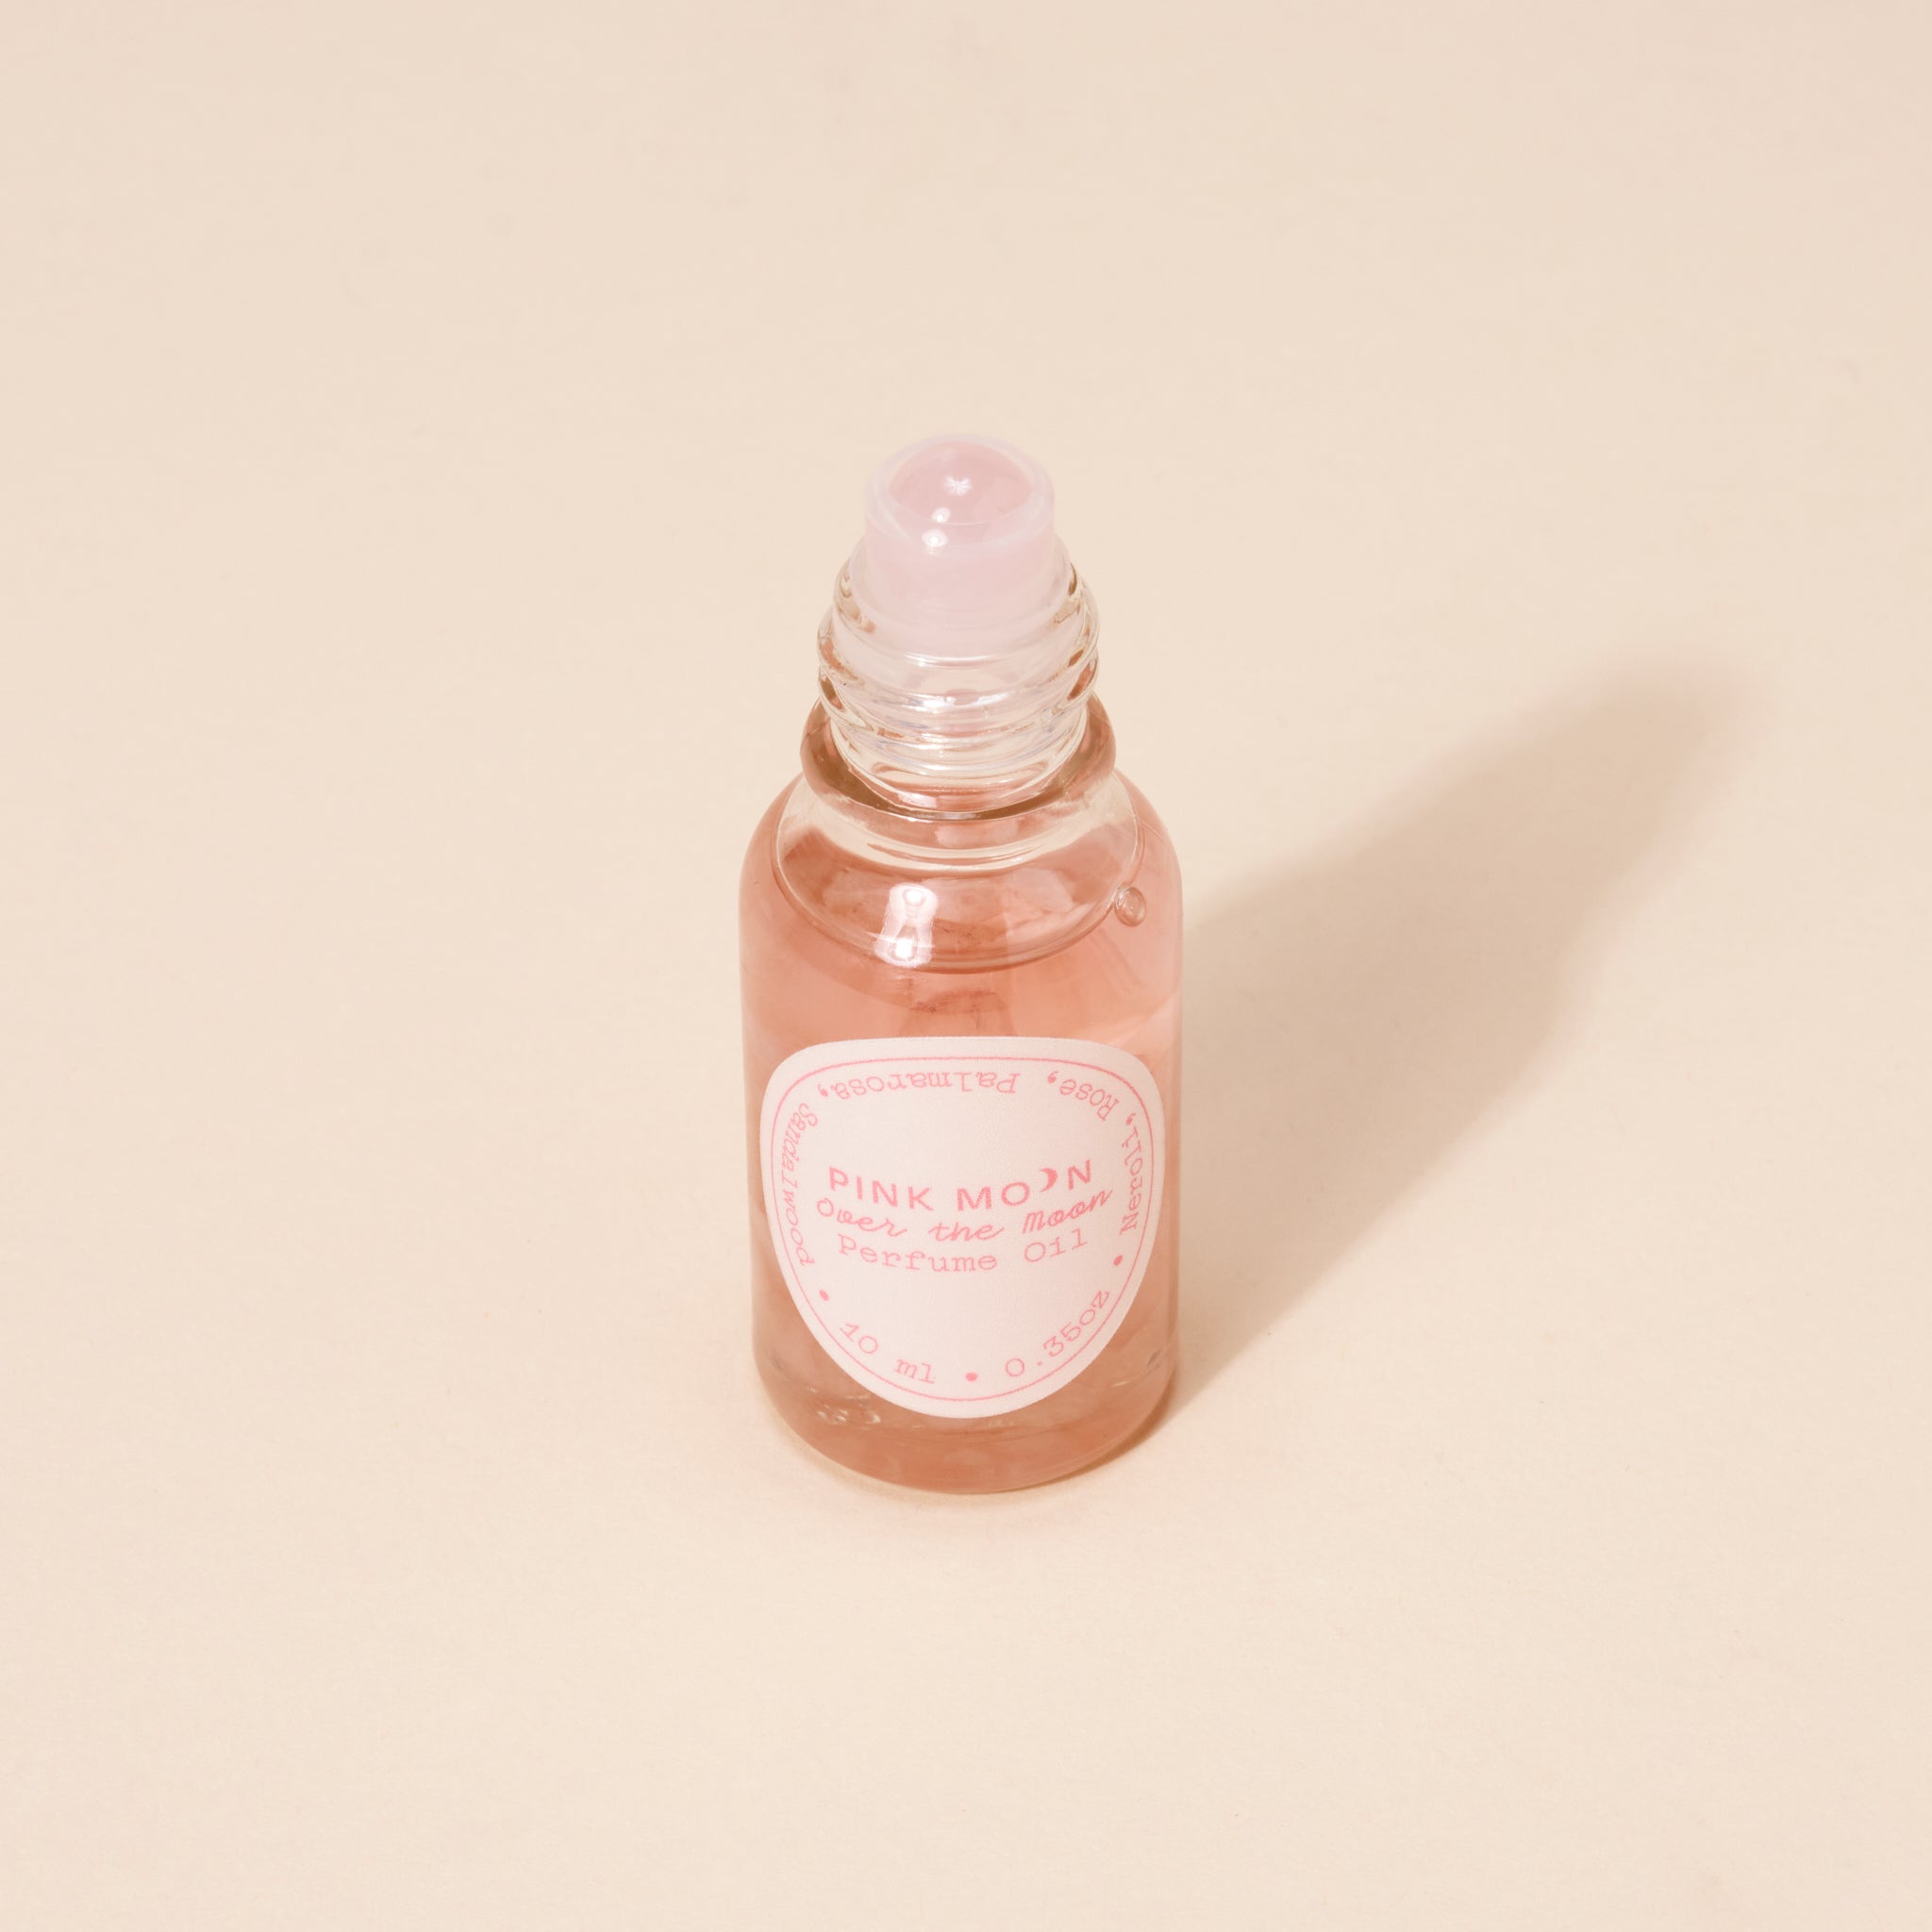 Over the Moon Aromatherapy Reiki Crystal Perfume Oil - Pink Moon